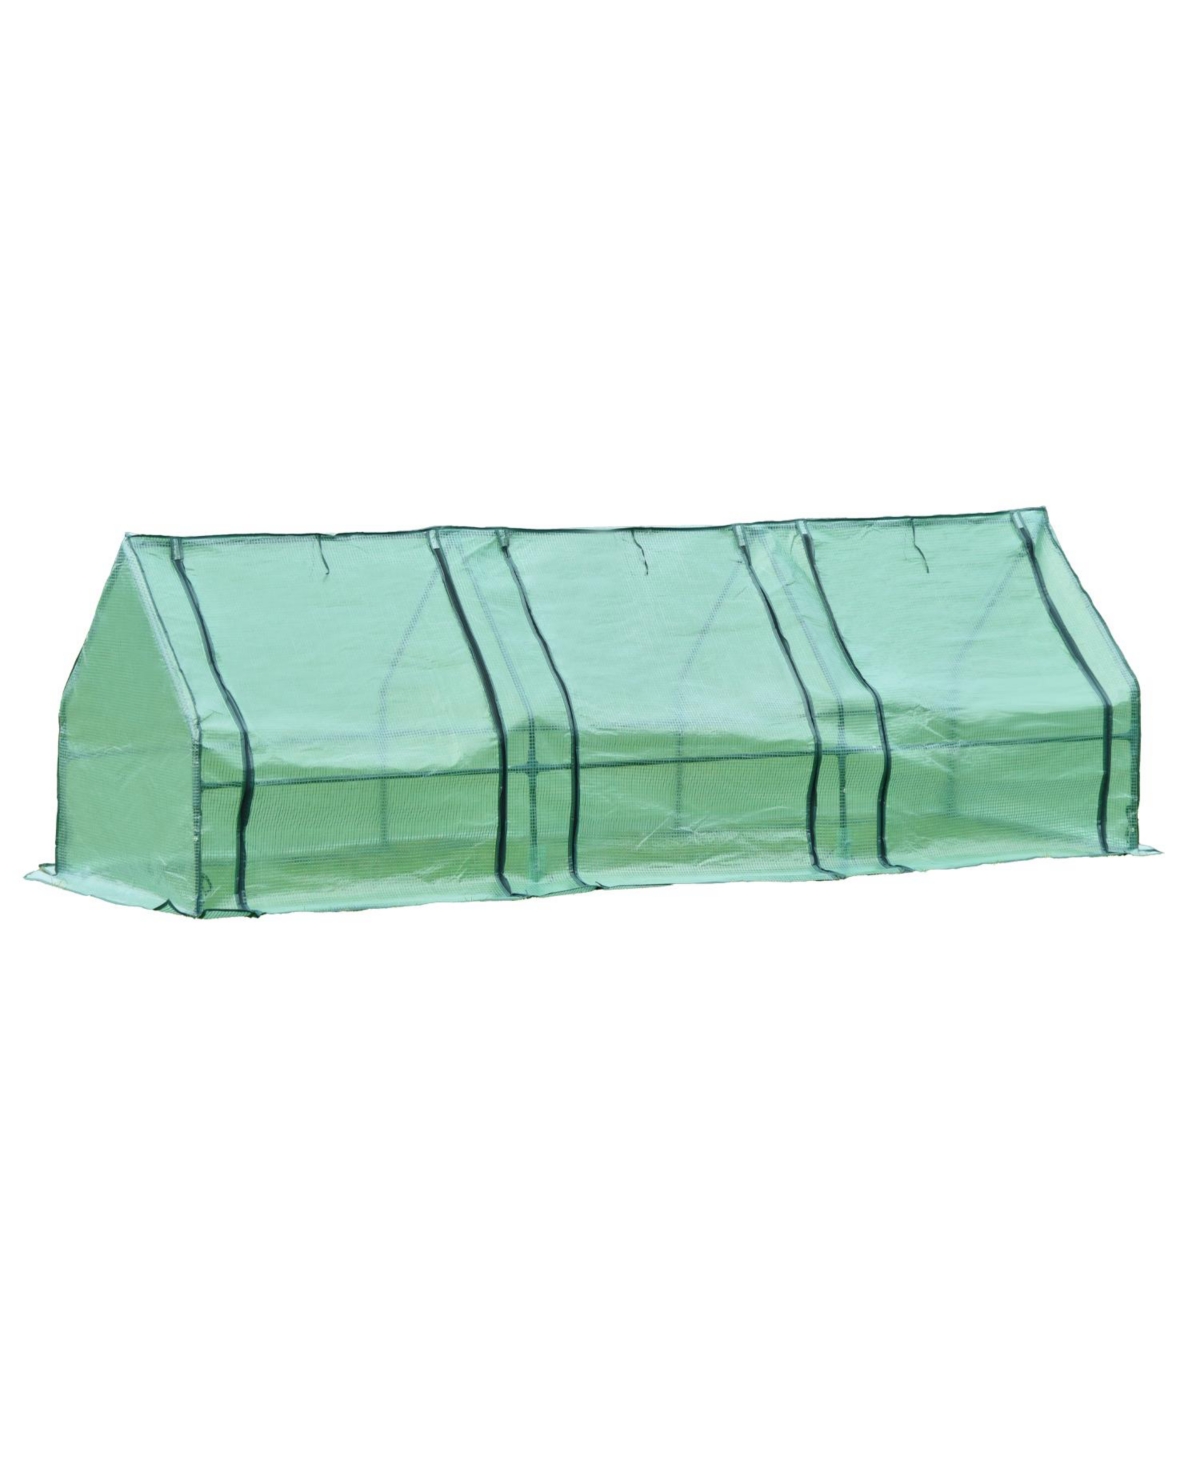 Mini Greenhouse 9 ft. x 3 ft. x 3 ft. Water Resistant Uv Protected Green Color - 3 Zipper Doors - Transparent